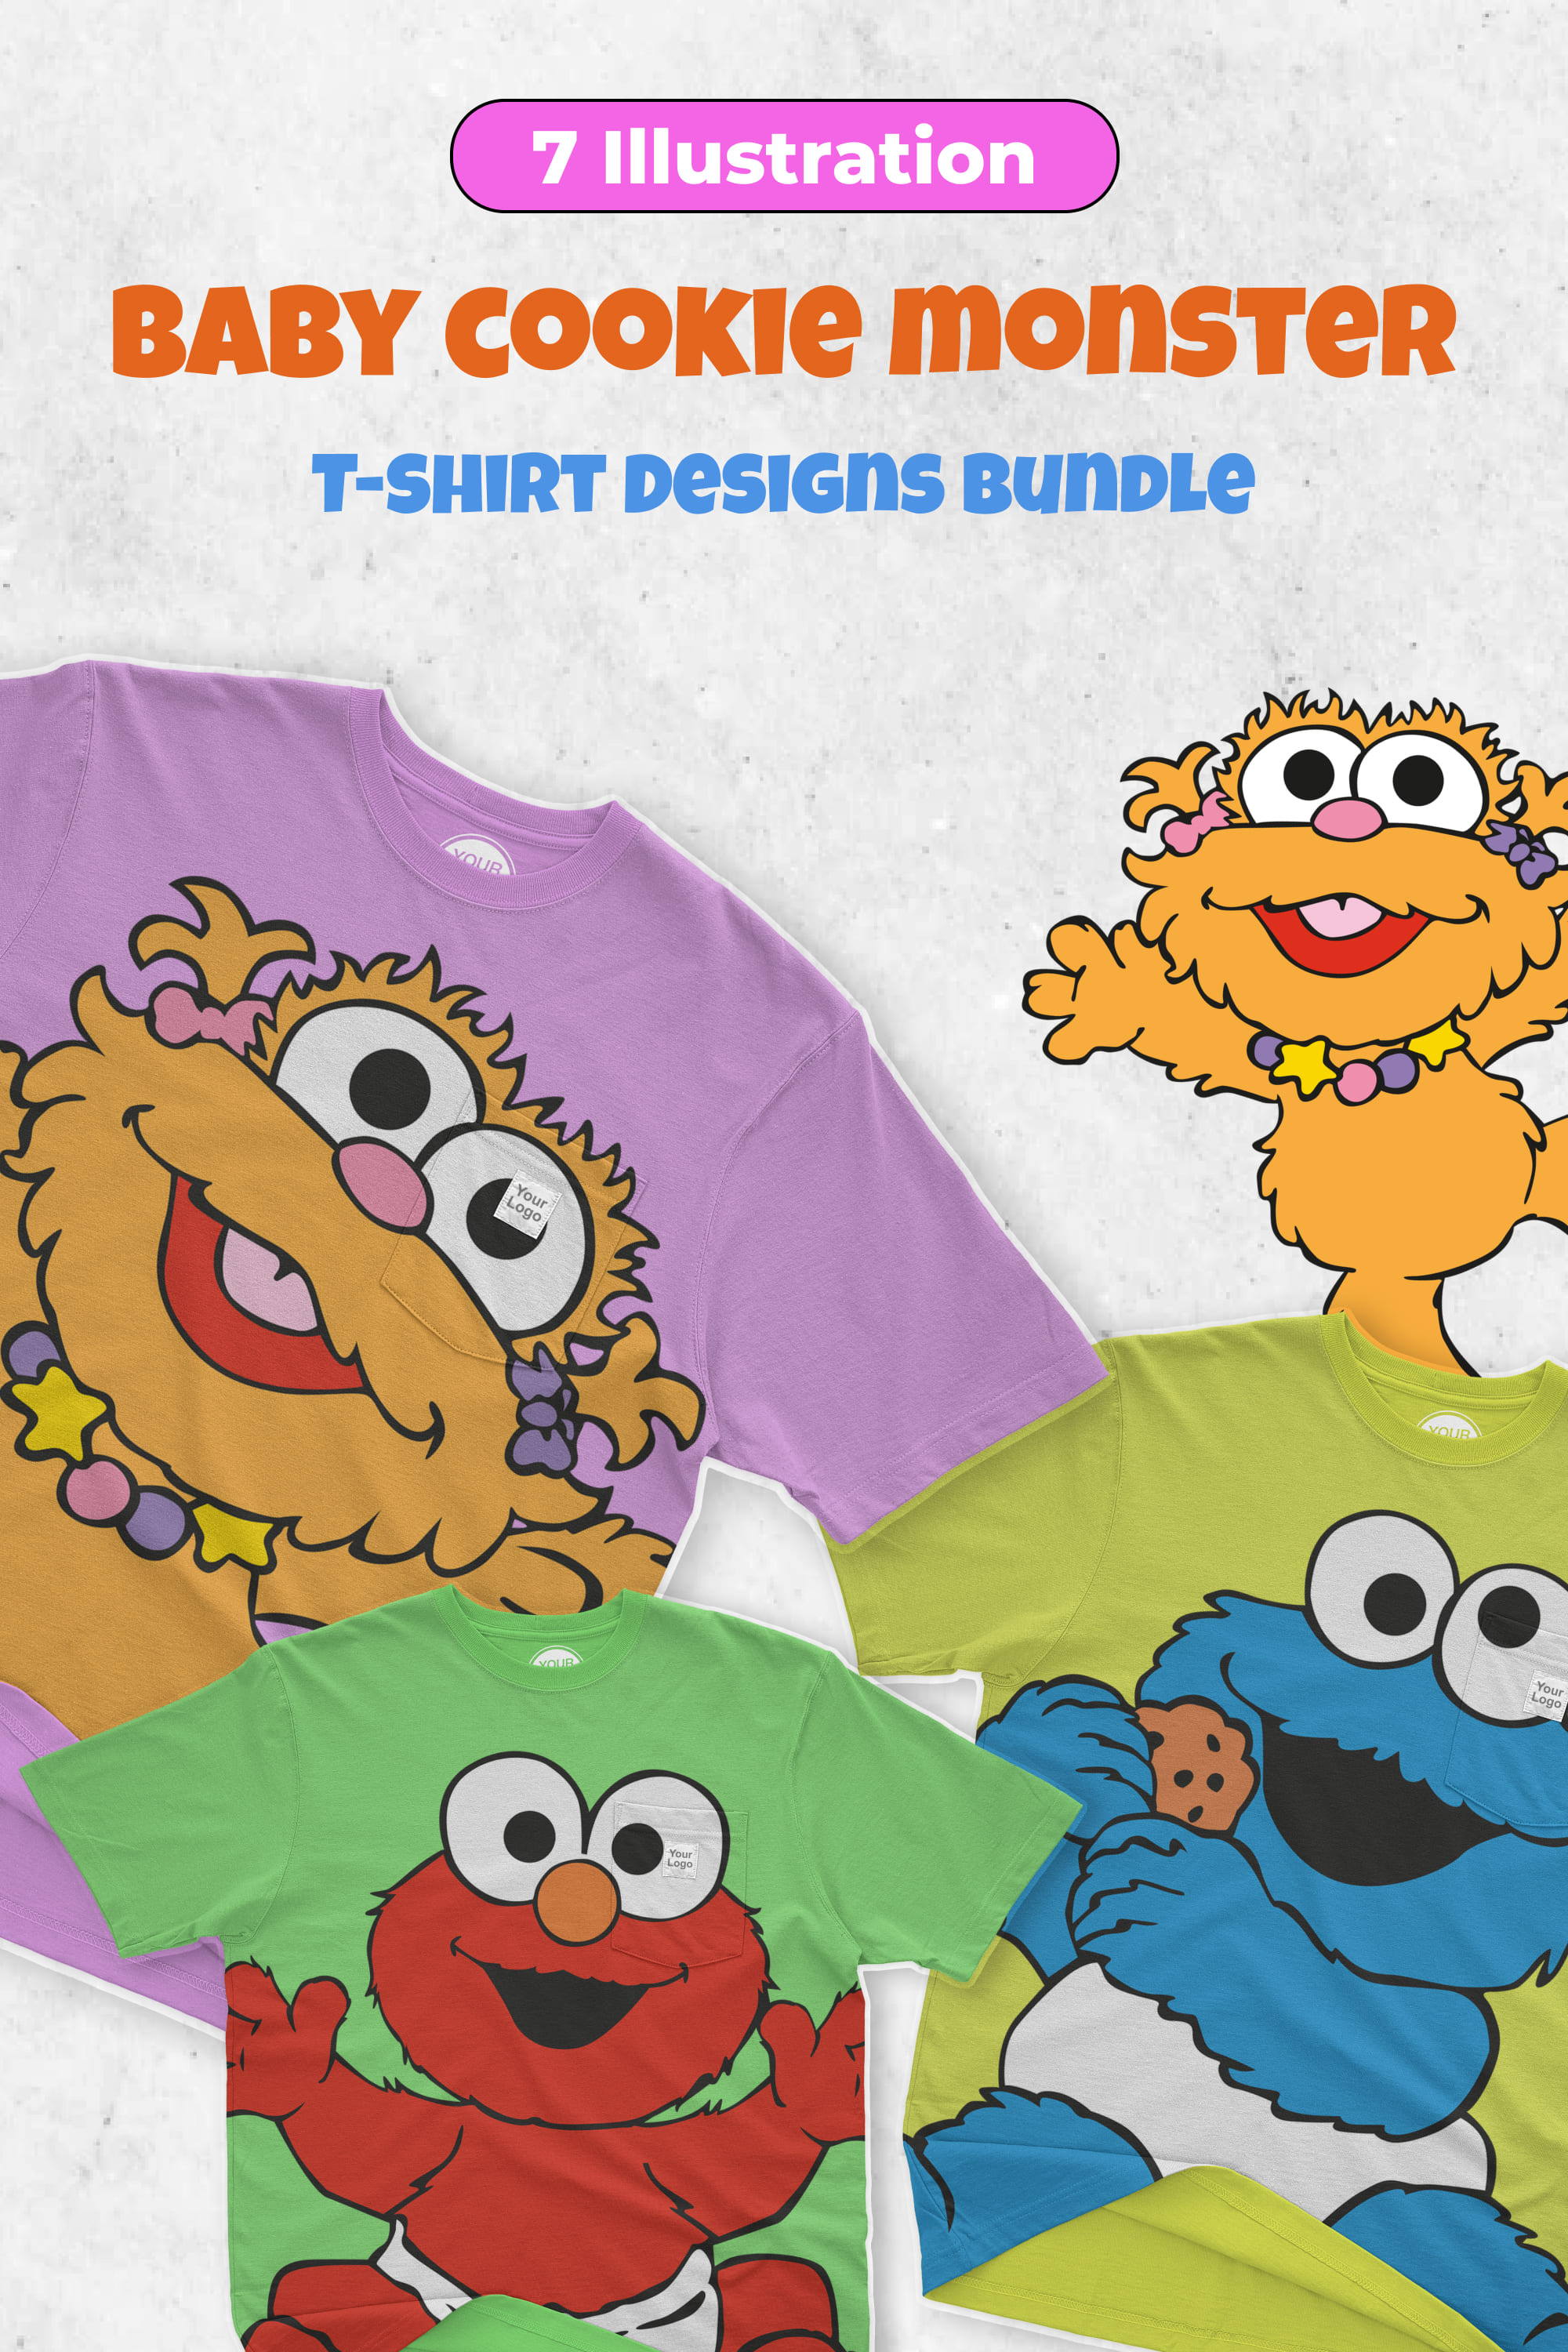 Baby Cookie Monster T-shirt Designs Bundle - Pinterest.